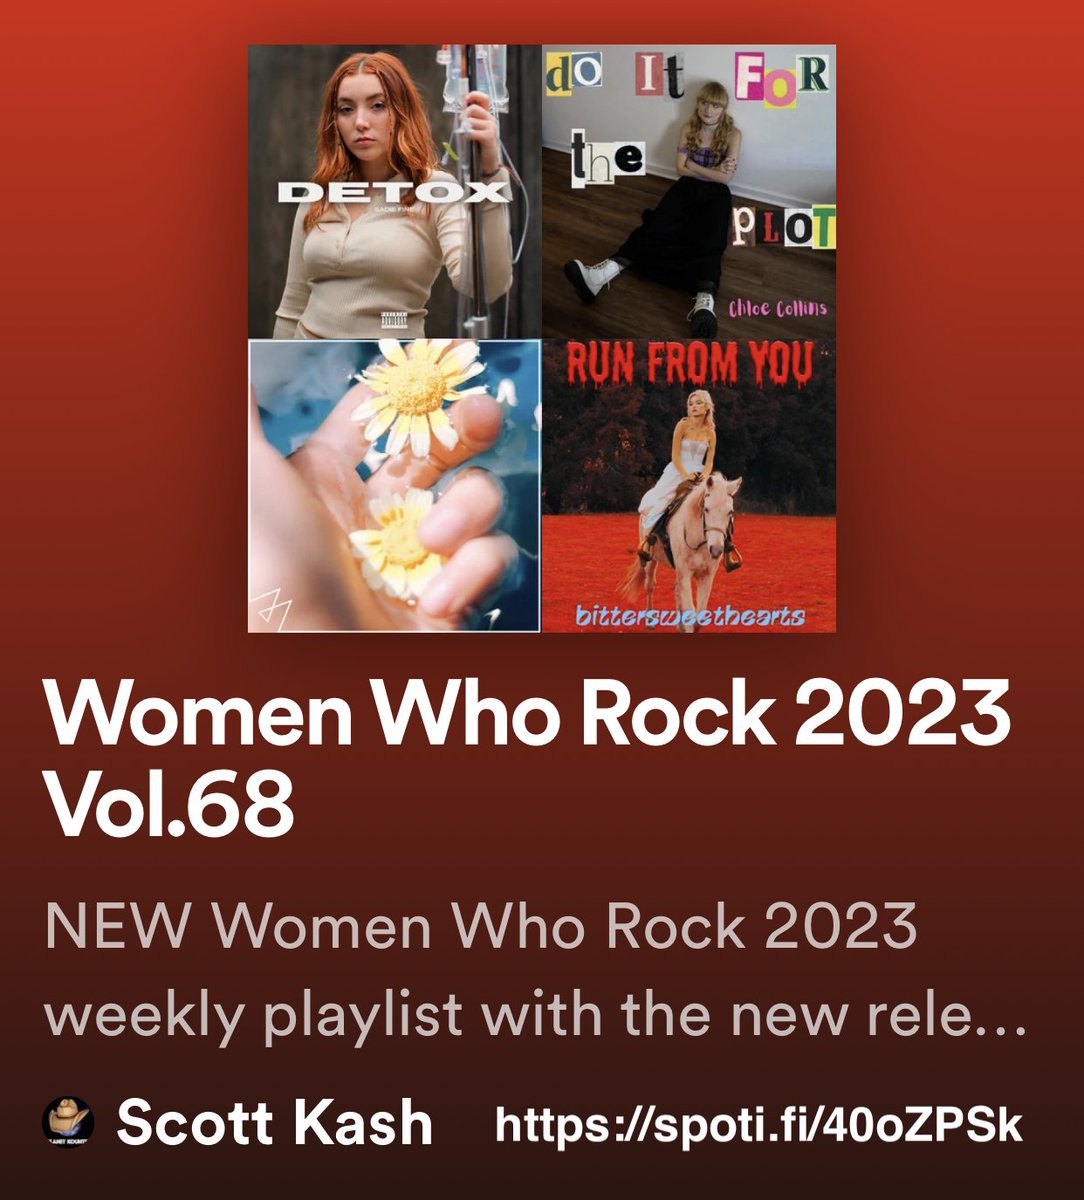 NEW #WomenWhoRock playlist with new releases by
@ChloeTemtchine 
@marymiddlefield
@FaithMarieJ & #UUin
@RLorinOfficial
#storiesmusic & #ameliamclean
+MORE

#Spotify
spoti.fi/40oZPSk

#NewMusic #Pop #Alt #Rock #Blues #RnB @BlackettMusic #rtitbot @rttanks #SpotifyRT